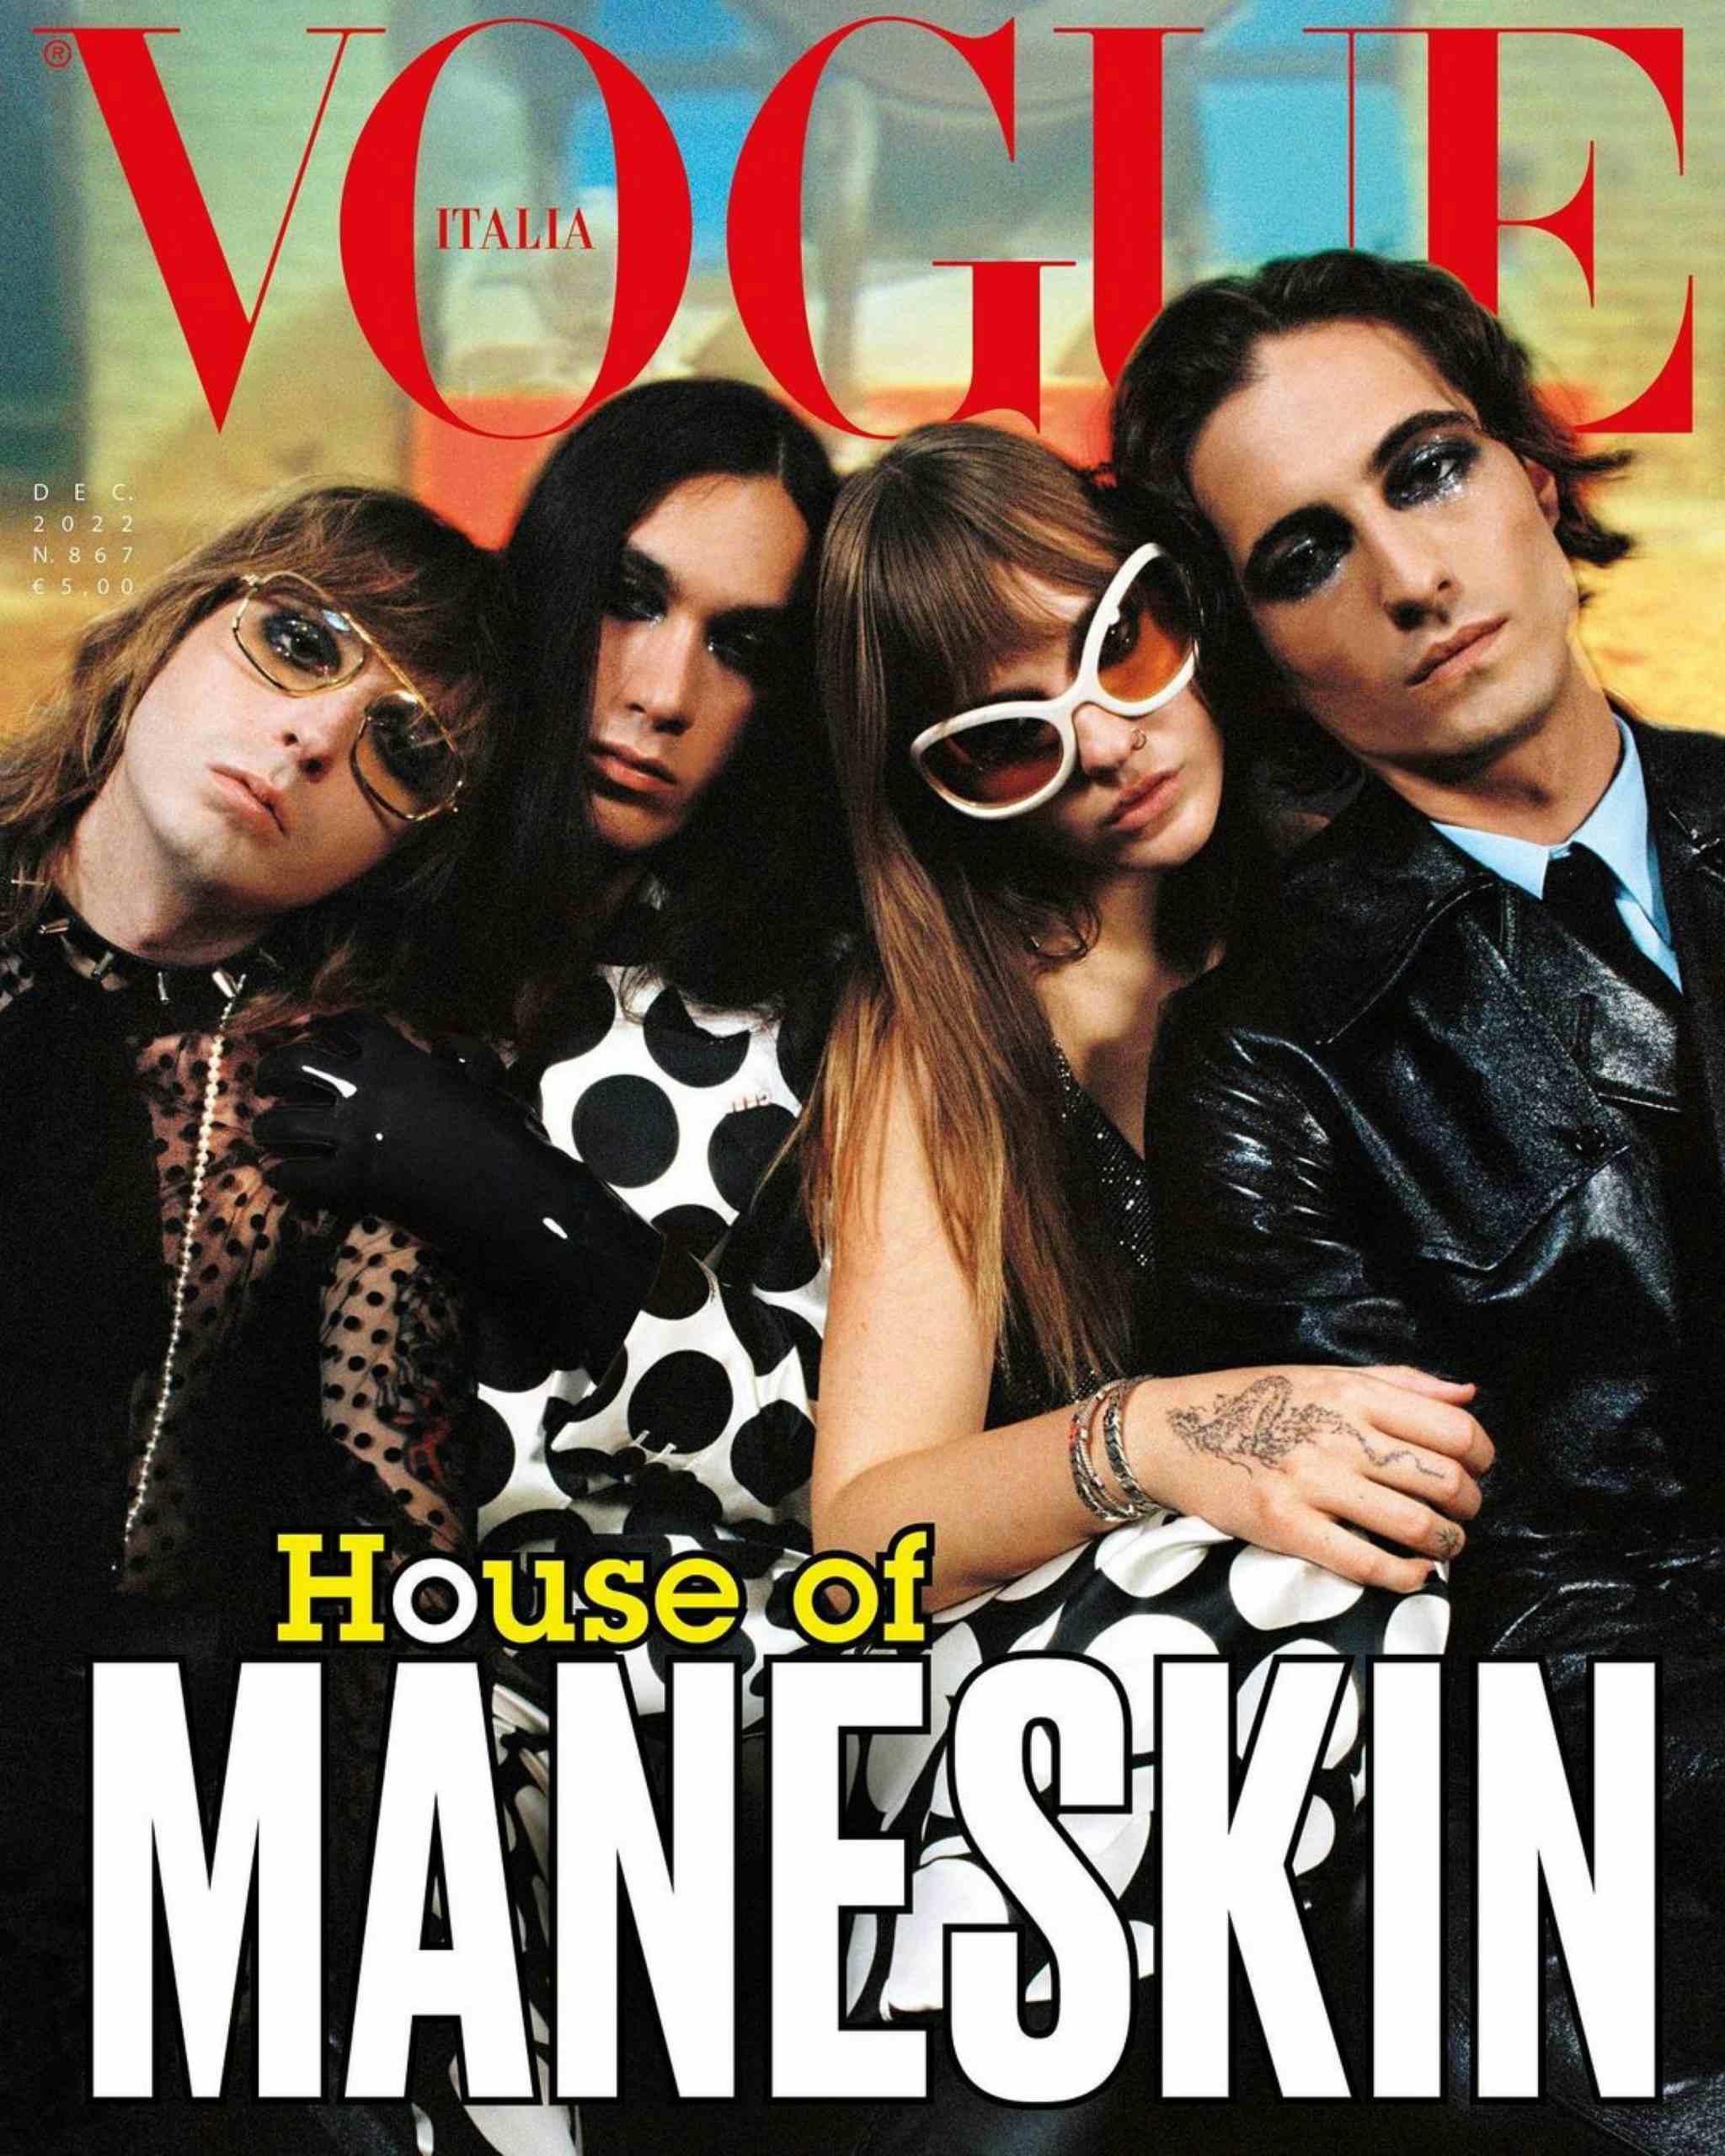 VOGUE ITALIA - House of Maneskin
Photographer: Hugo Comte
Model: Maneskin
